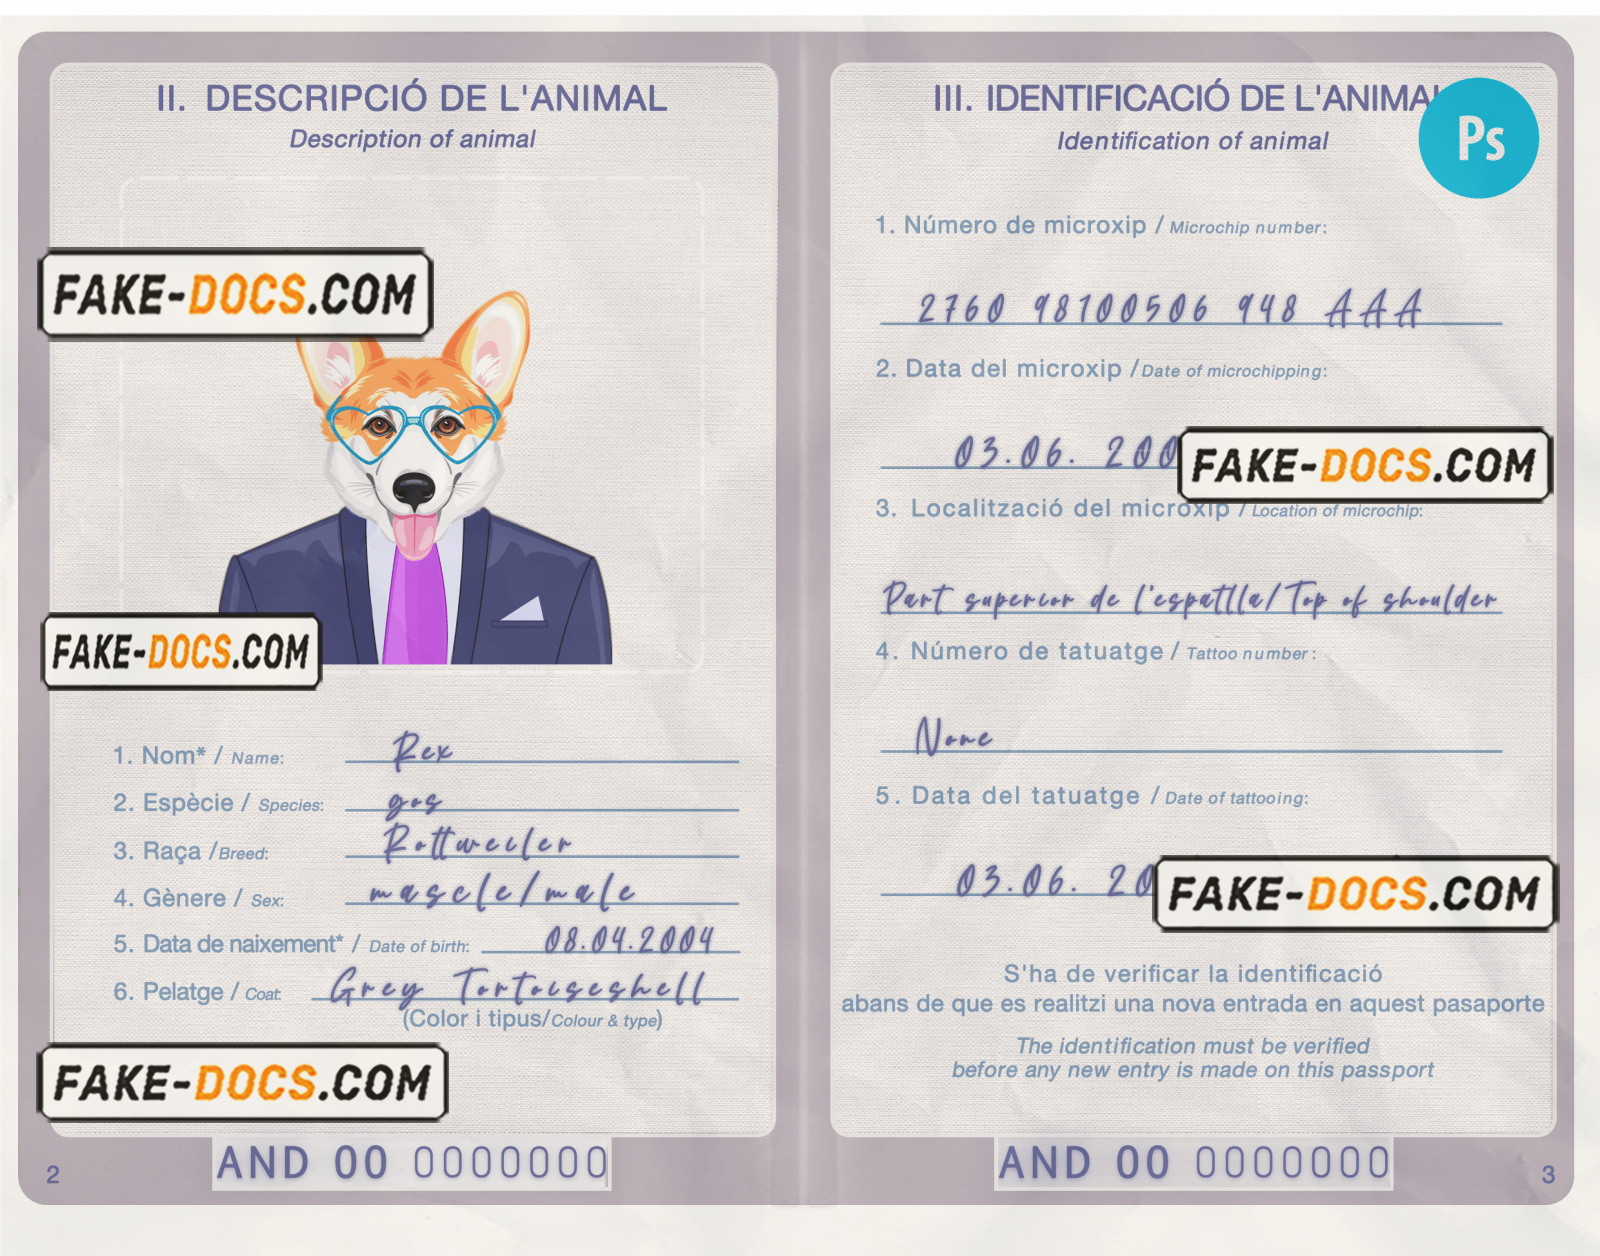 Andorra dog (animal, pet) passport PSD template, fully editable scan